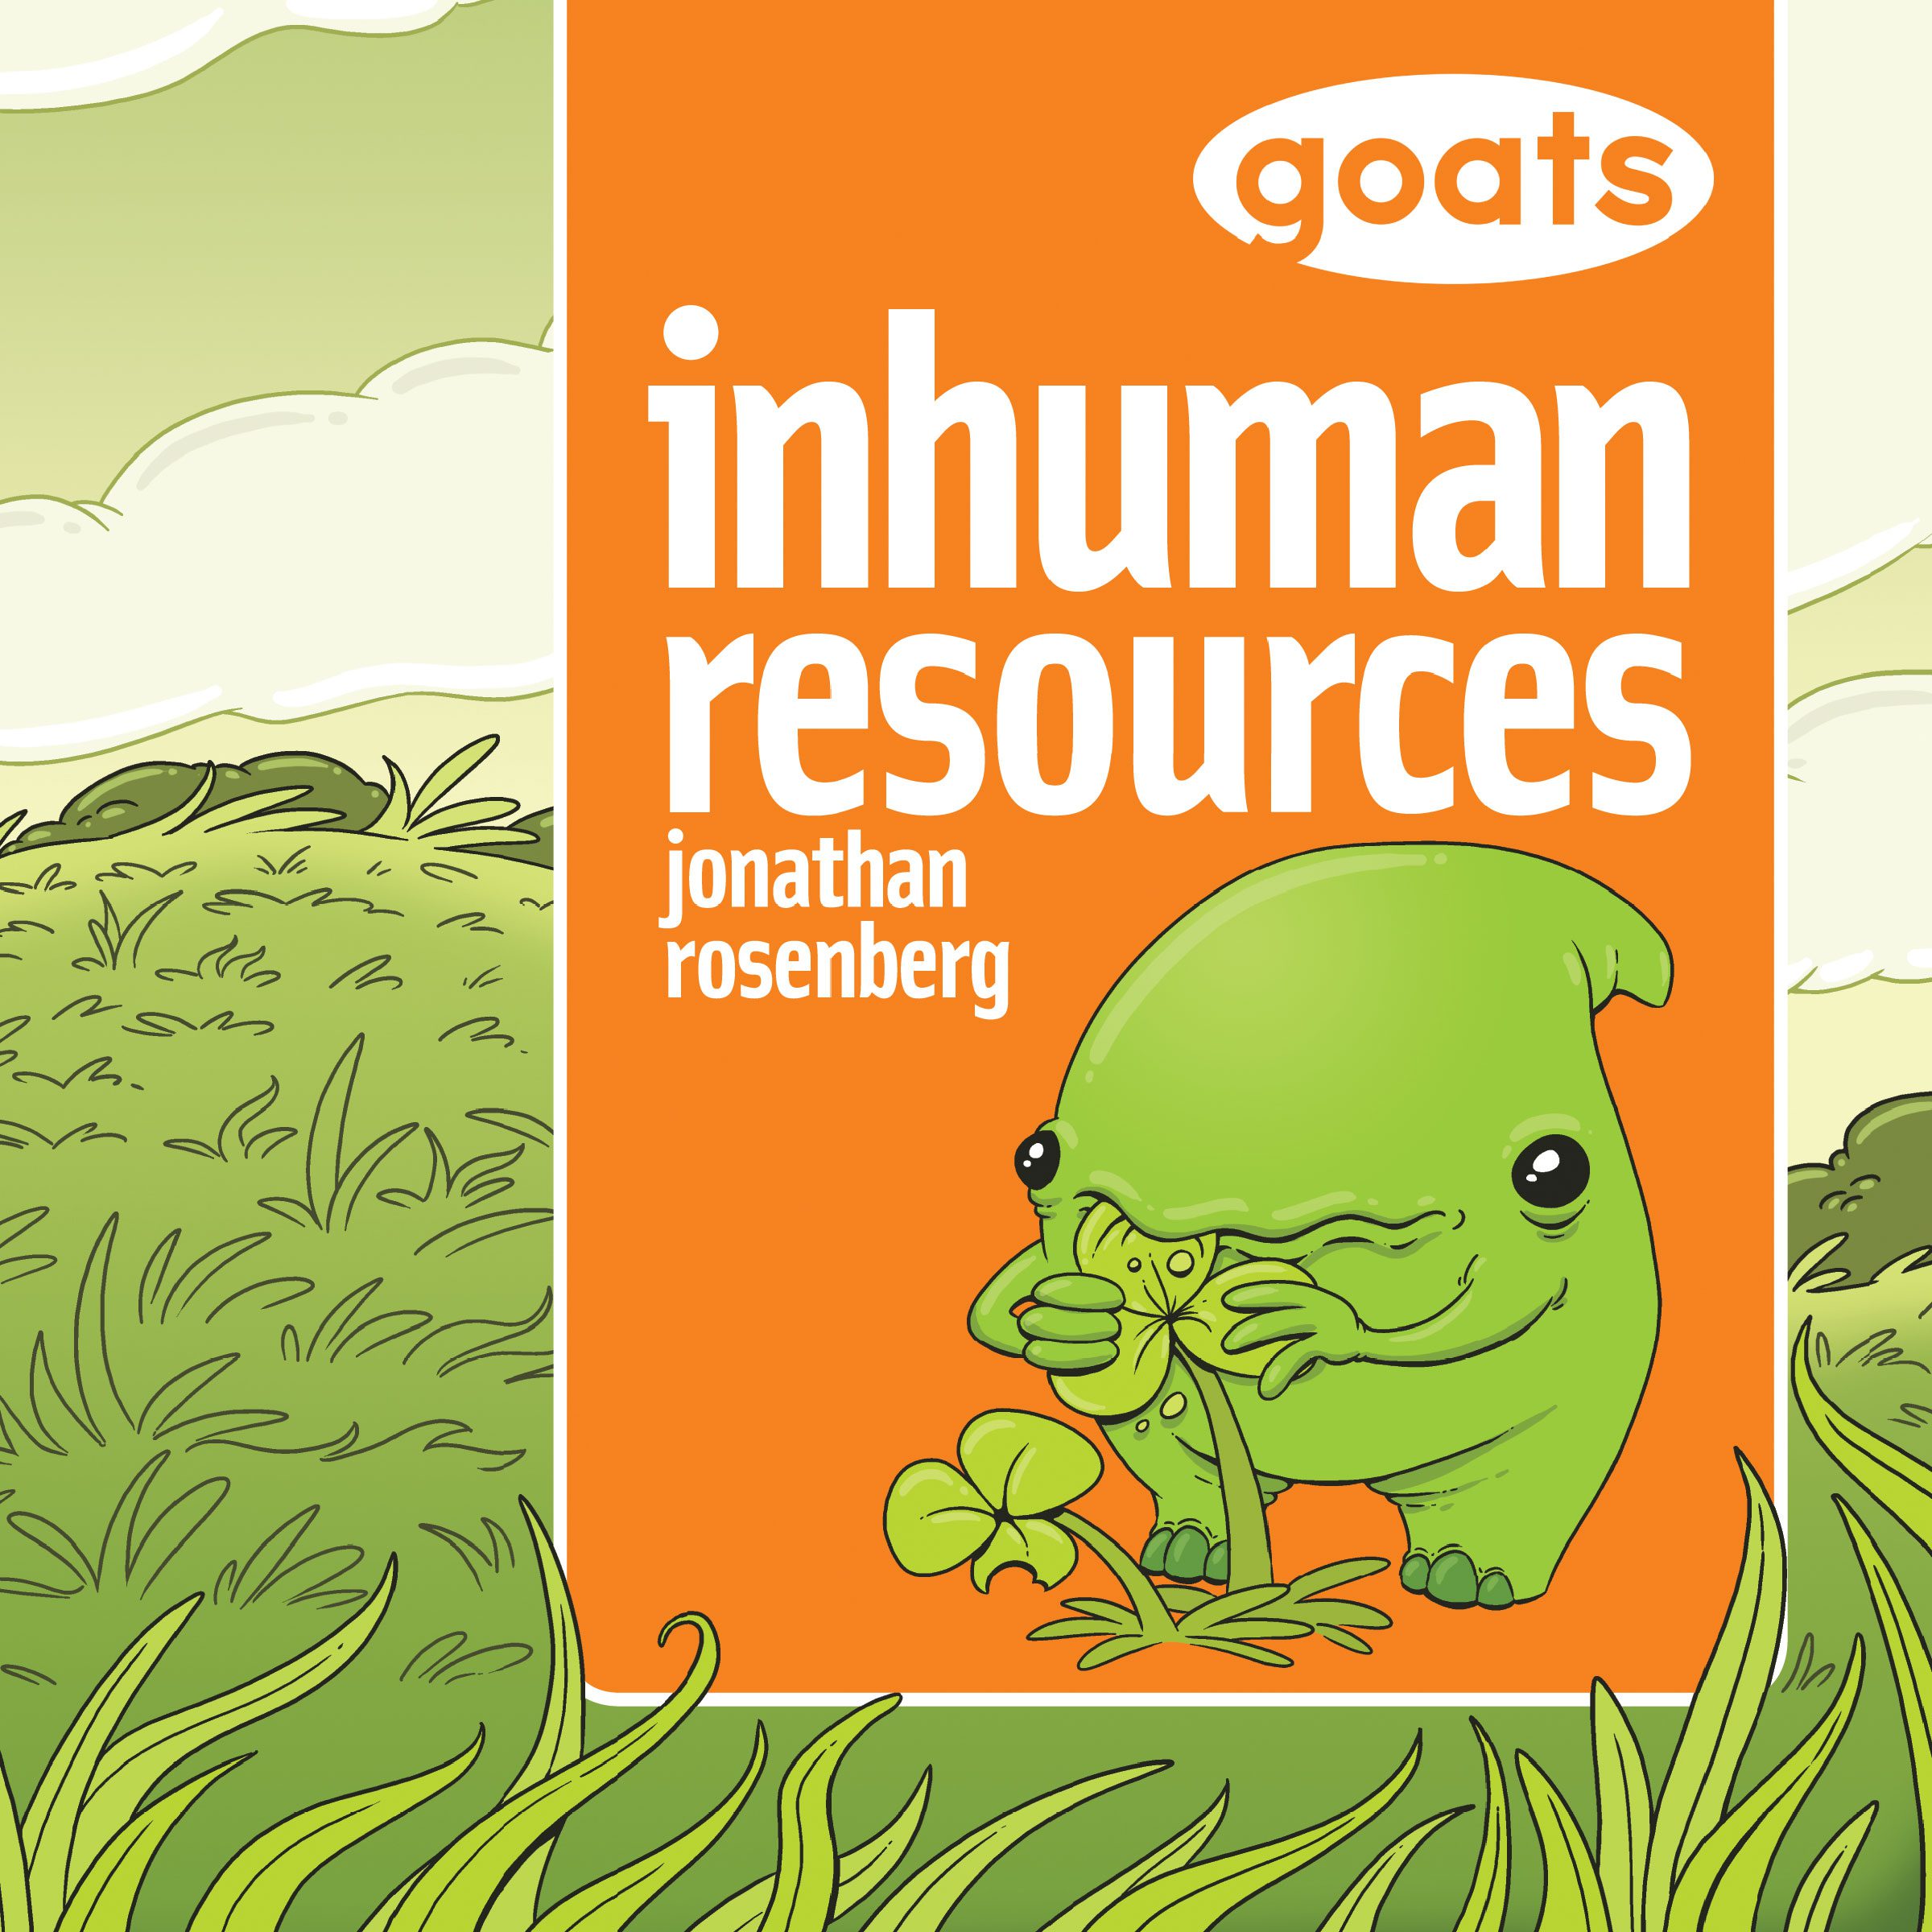 Goats Inhuman Resources